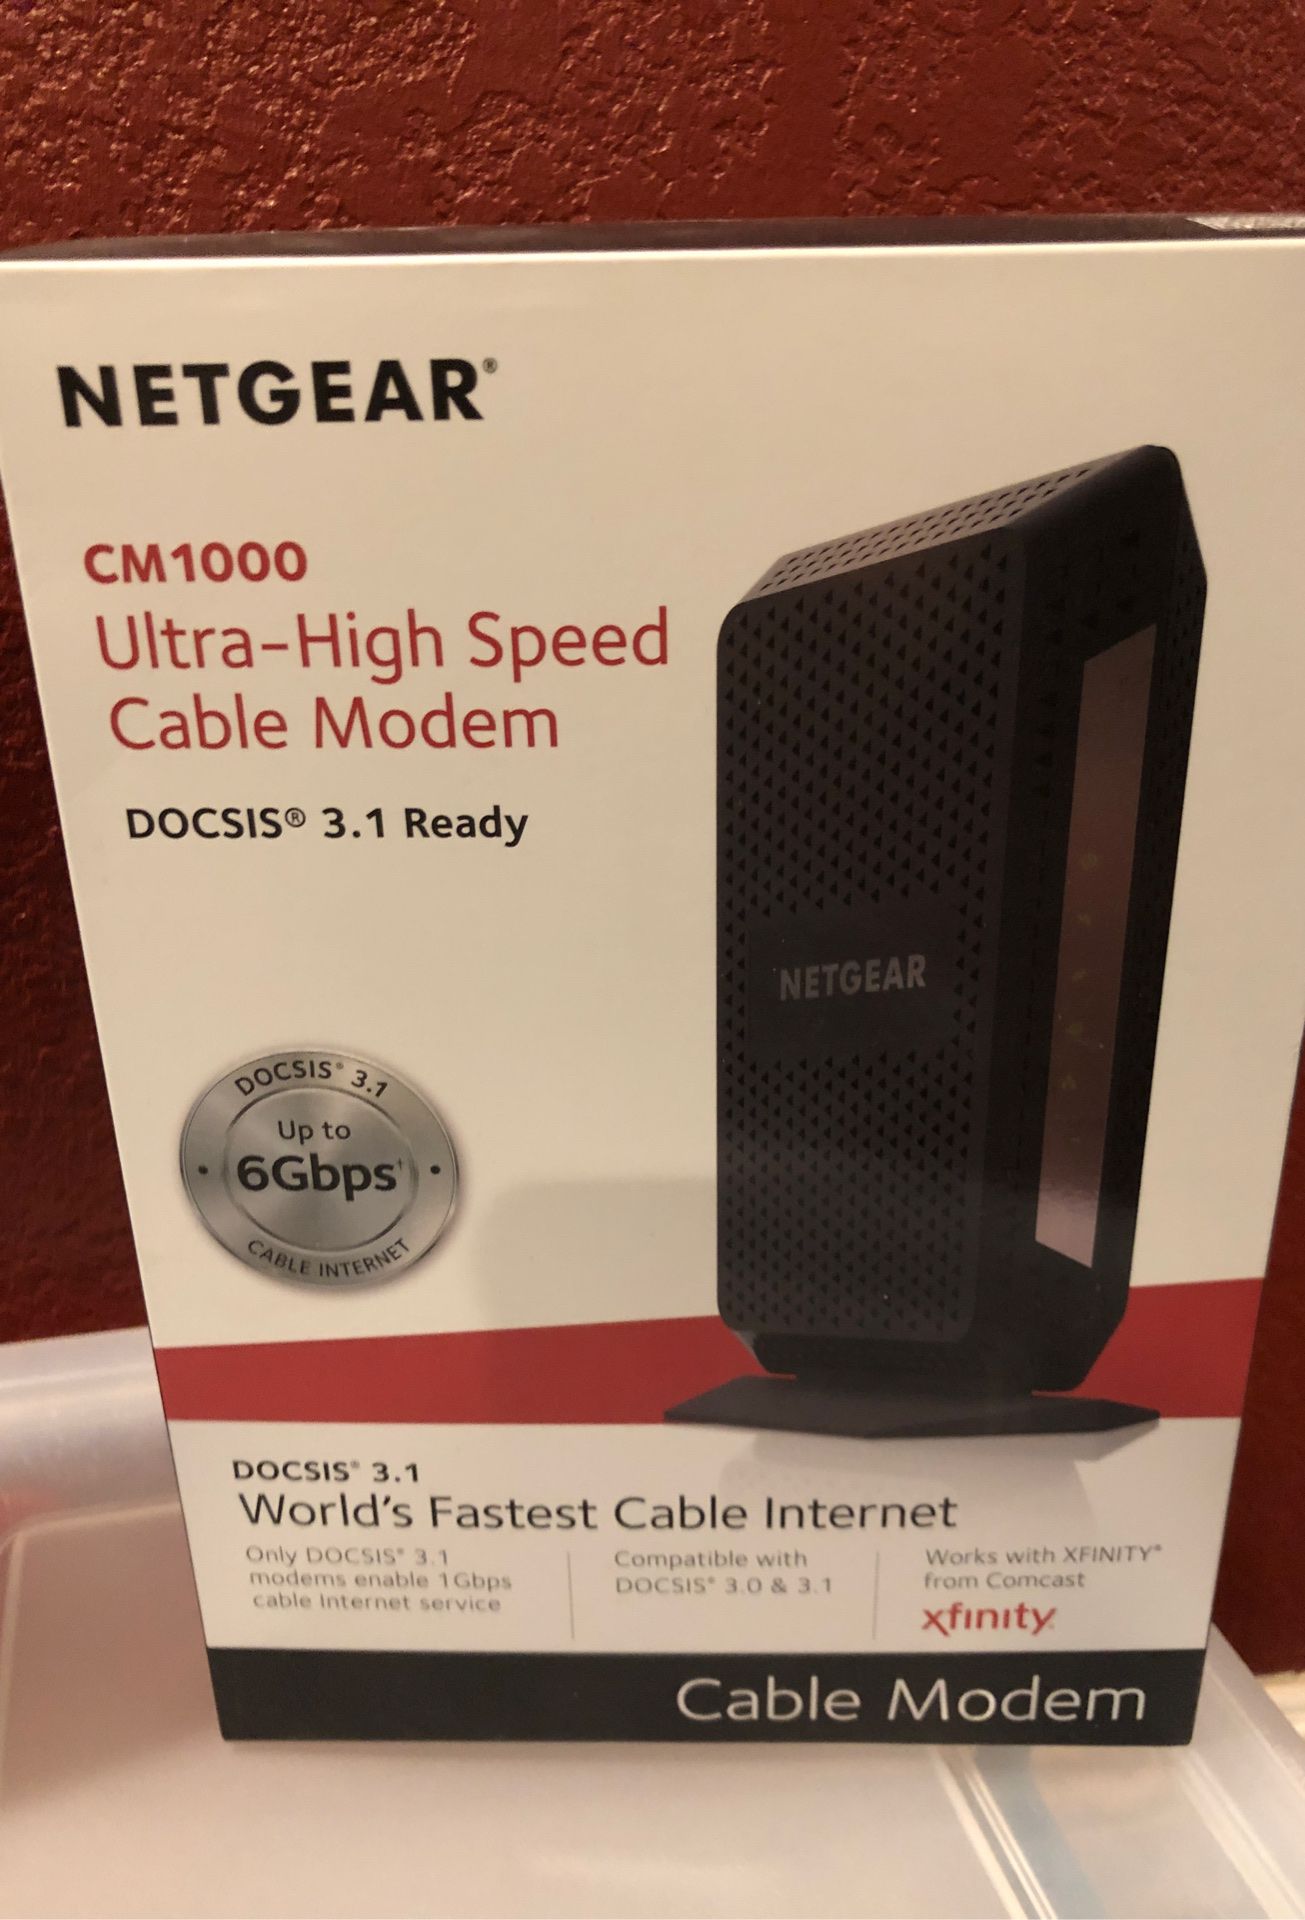 Netgear cable modem